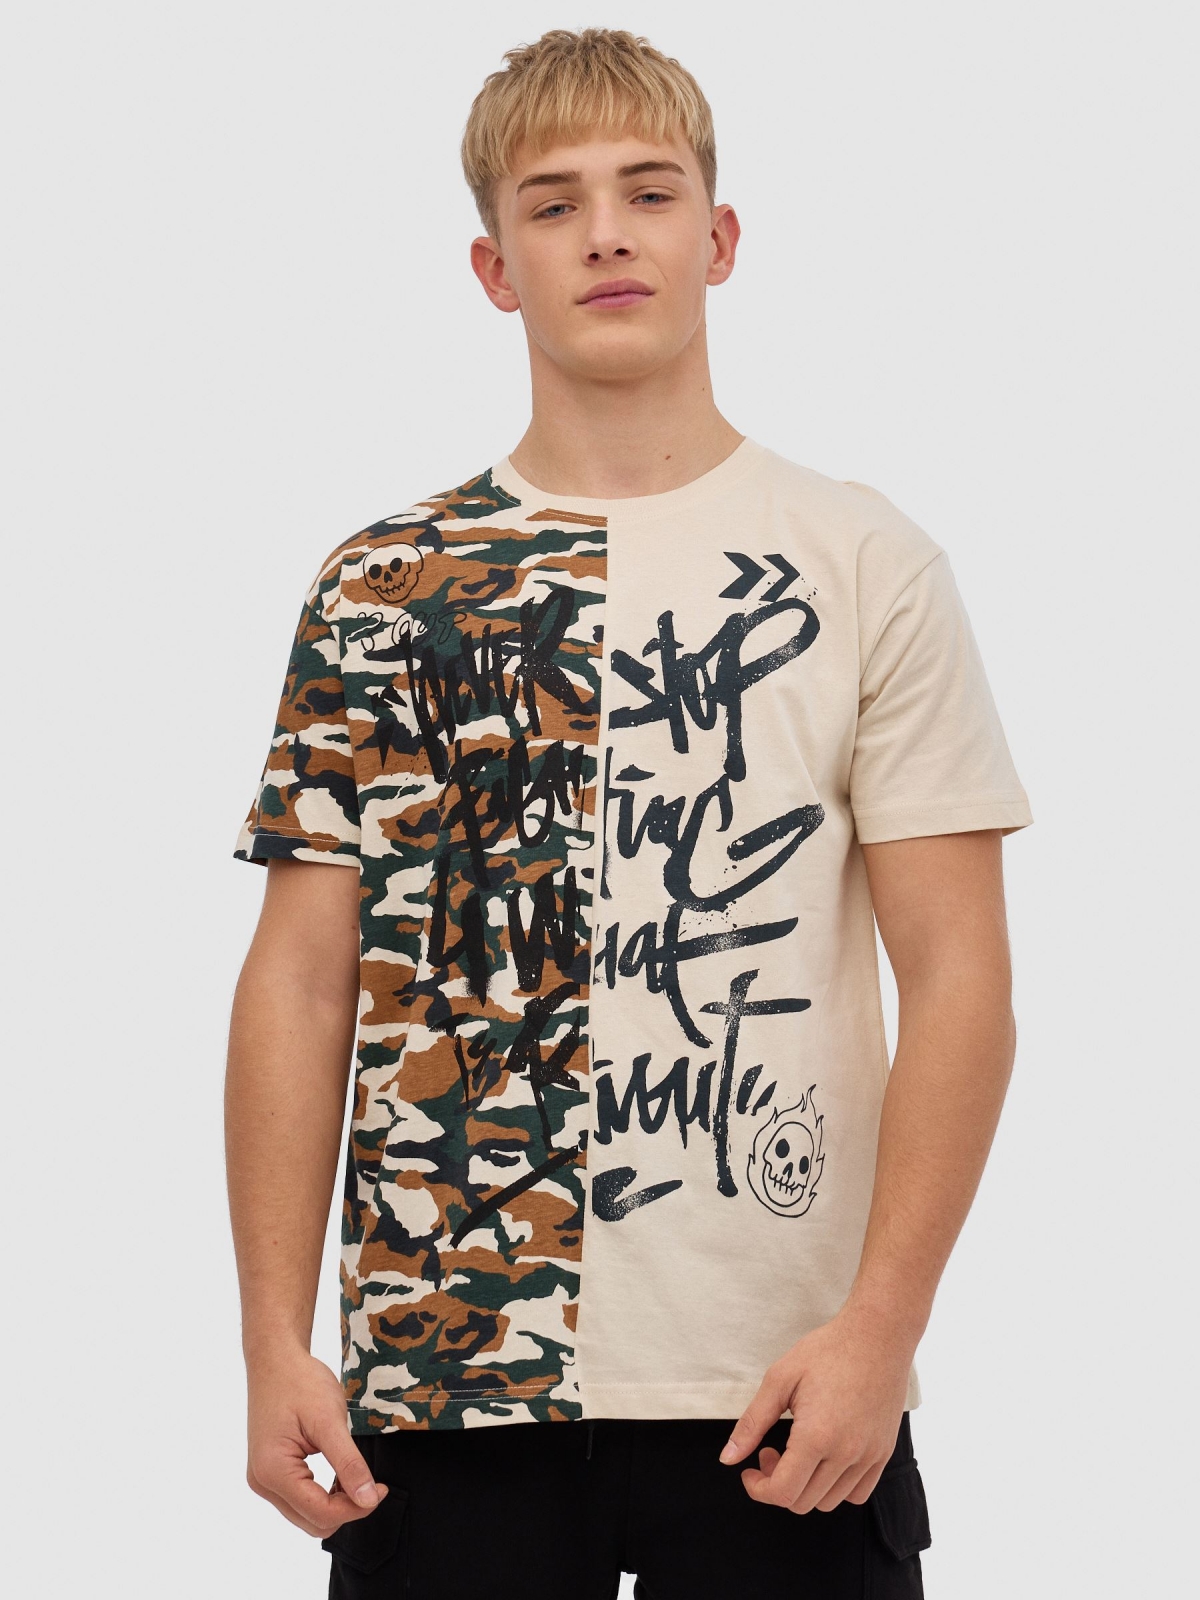 Camiseta camuflaje graffiti arena vista media frontal